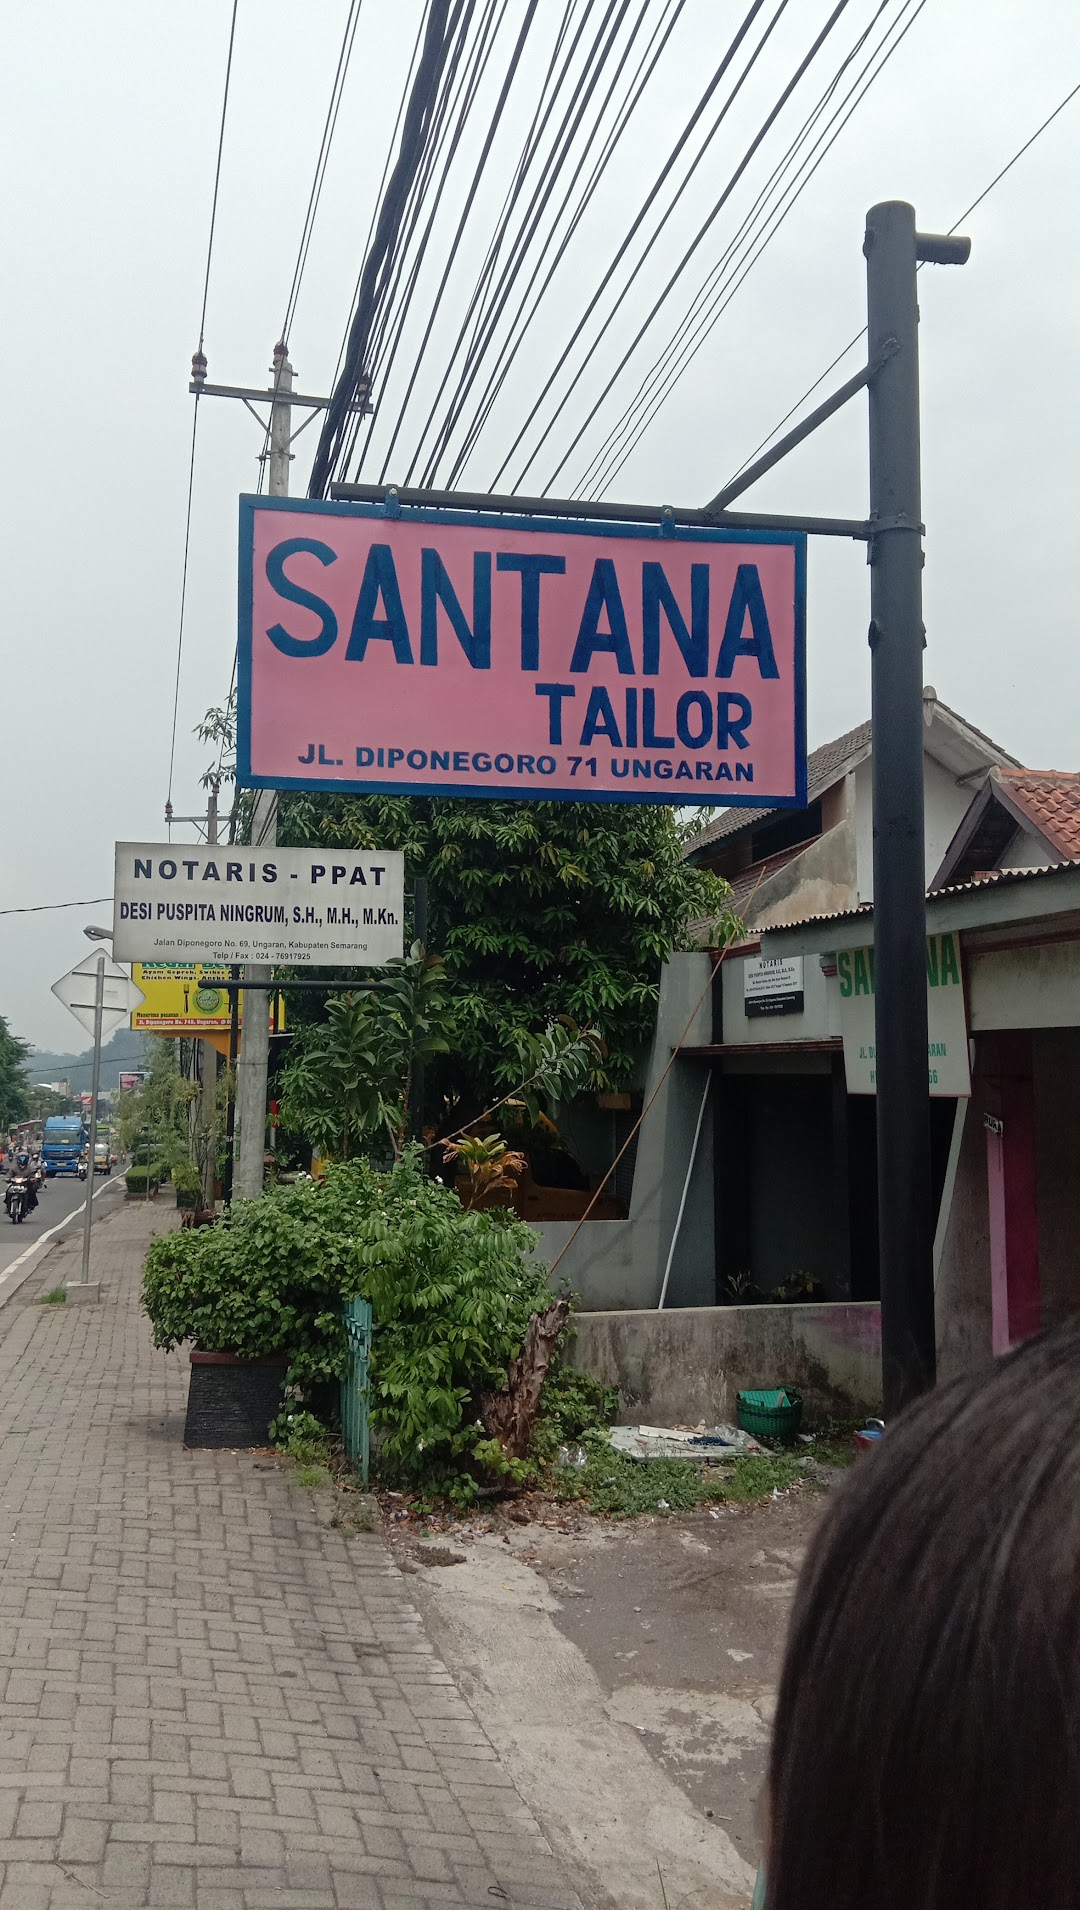 Santana Tailor